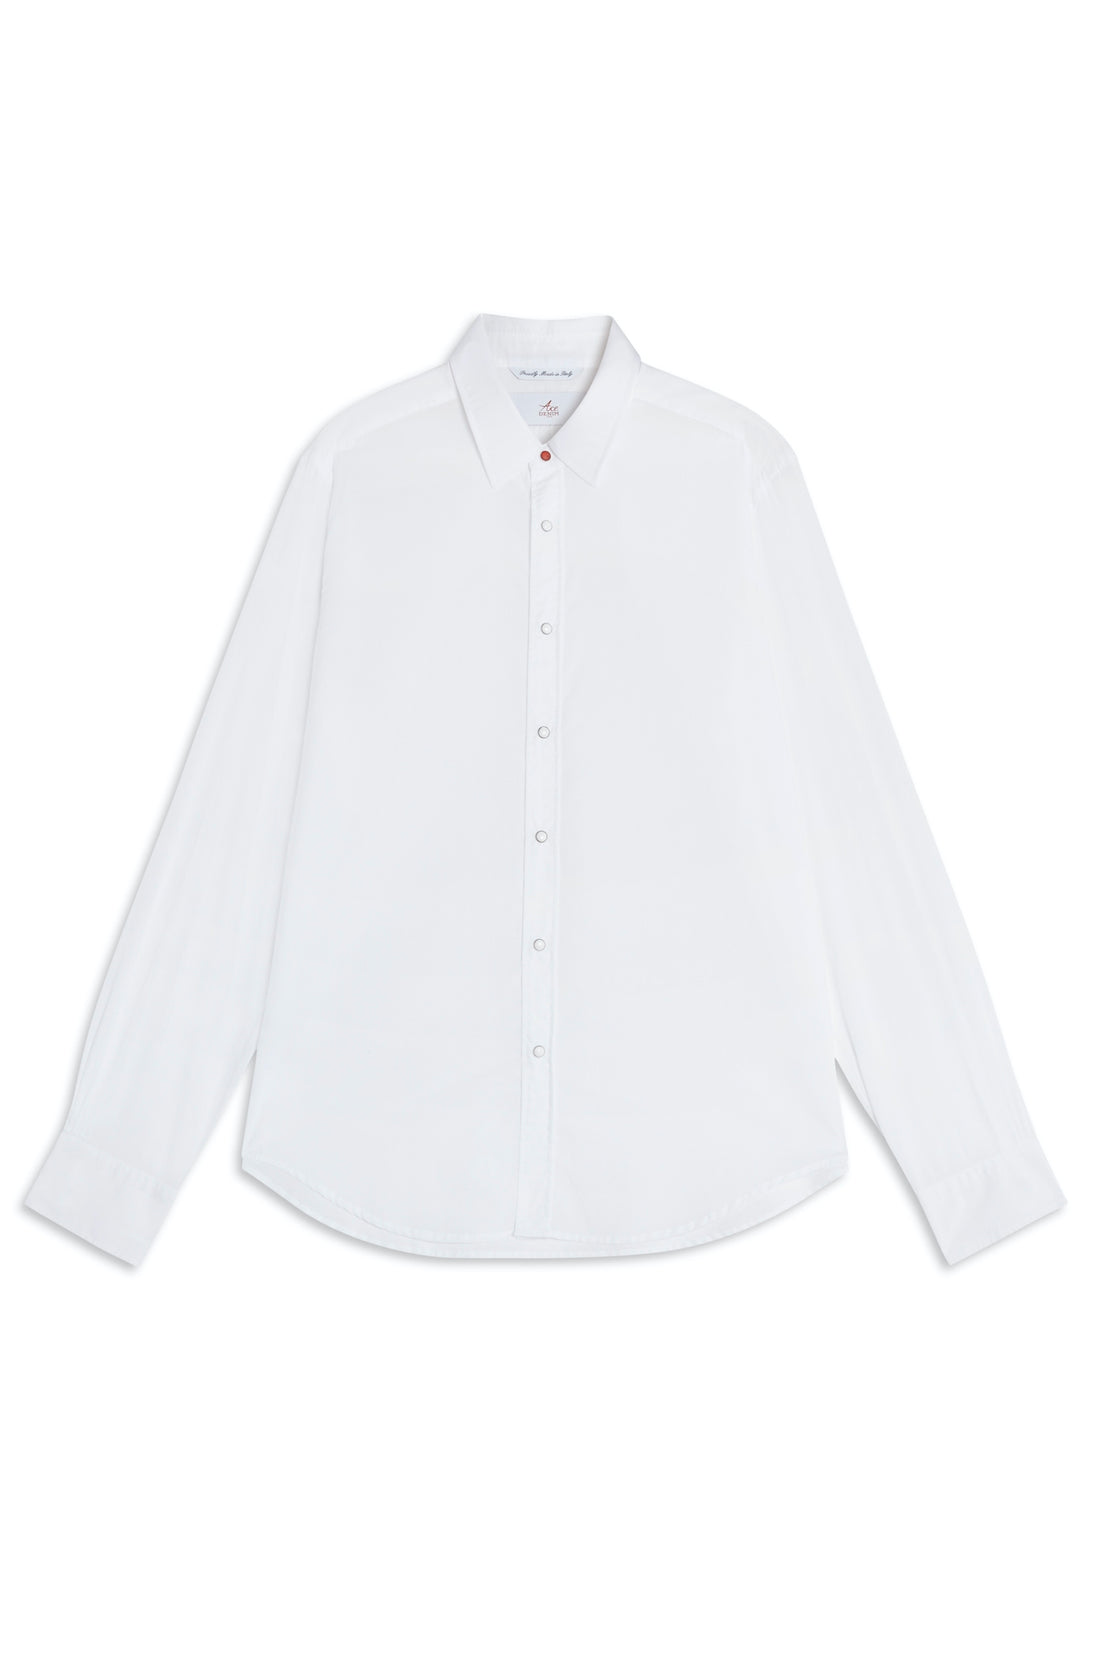 chemise coton blanc slim